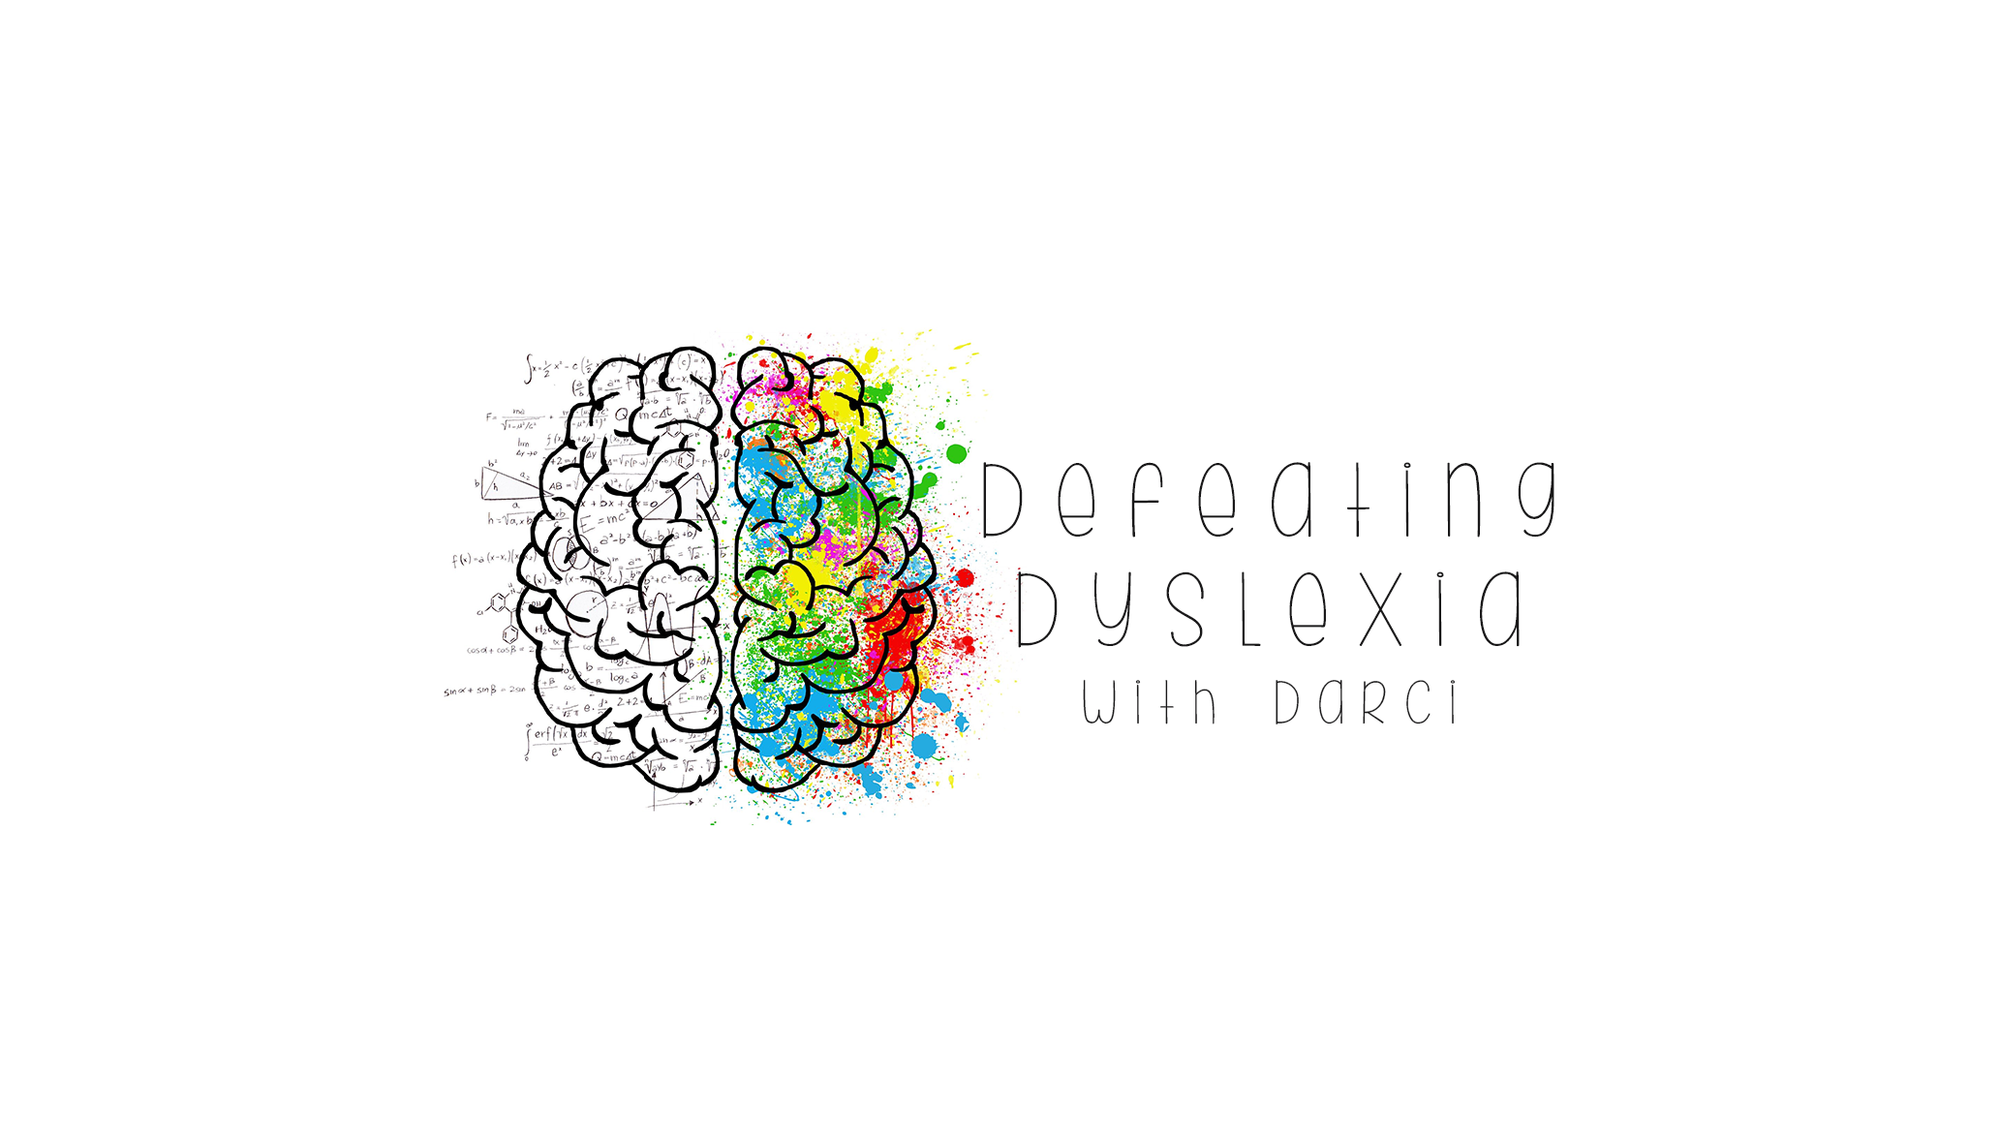 Providing Assistance to Those With Dyslexia - Darci Ziegler